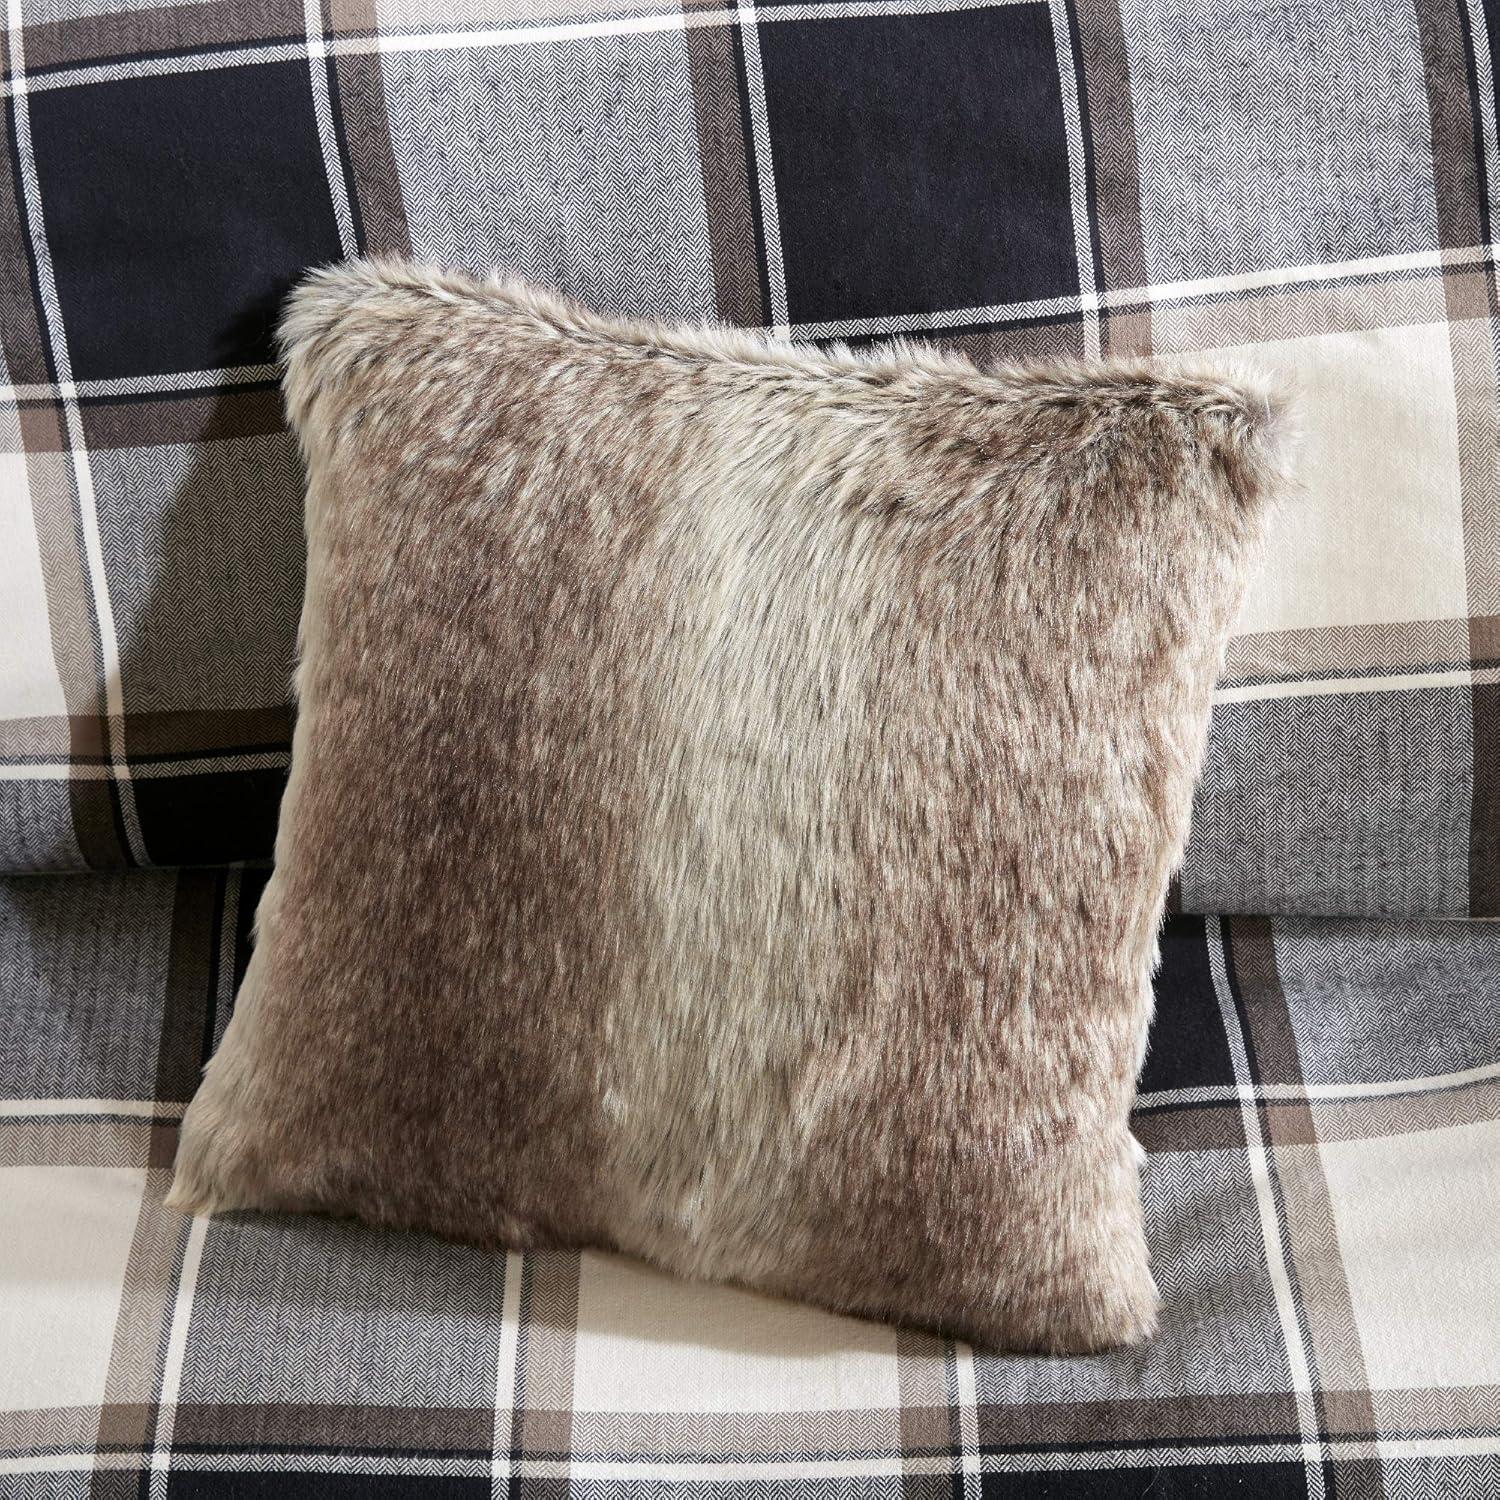 Urban Cabin King-Size Brown Plaid Cotton Comforter Set